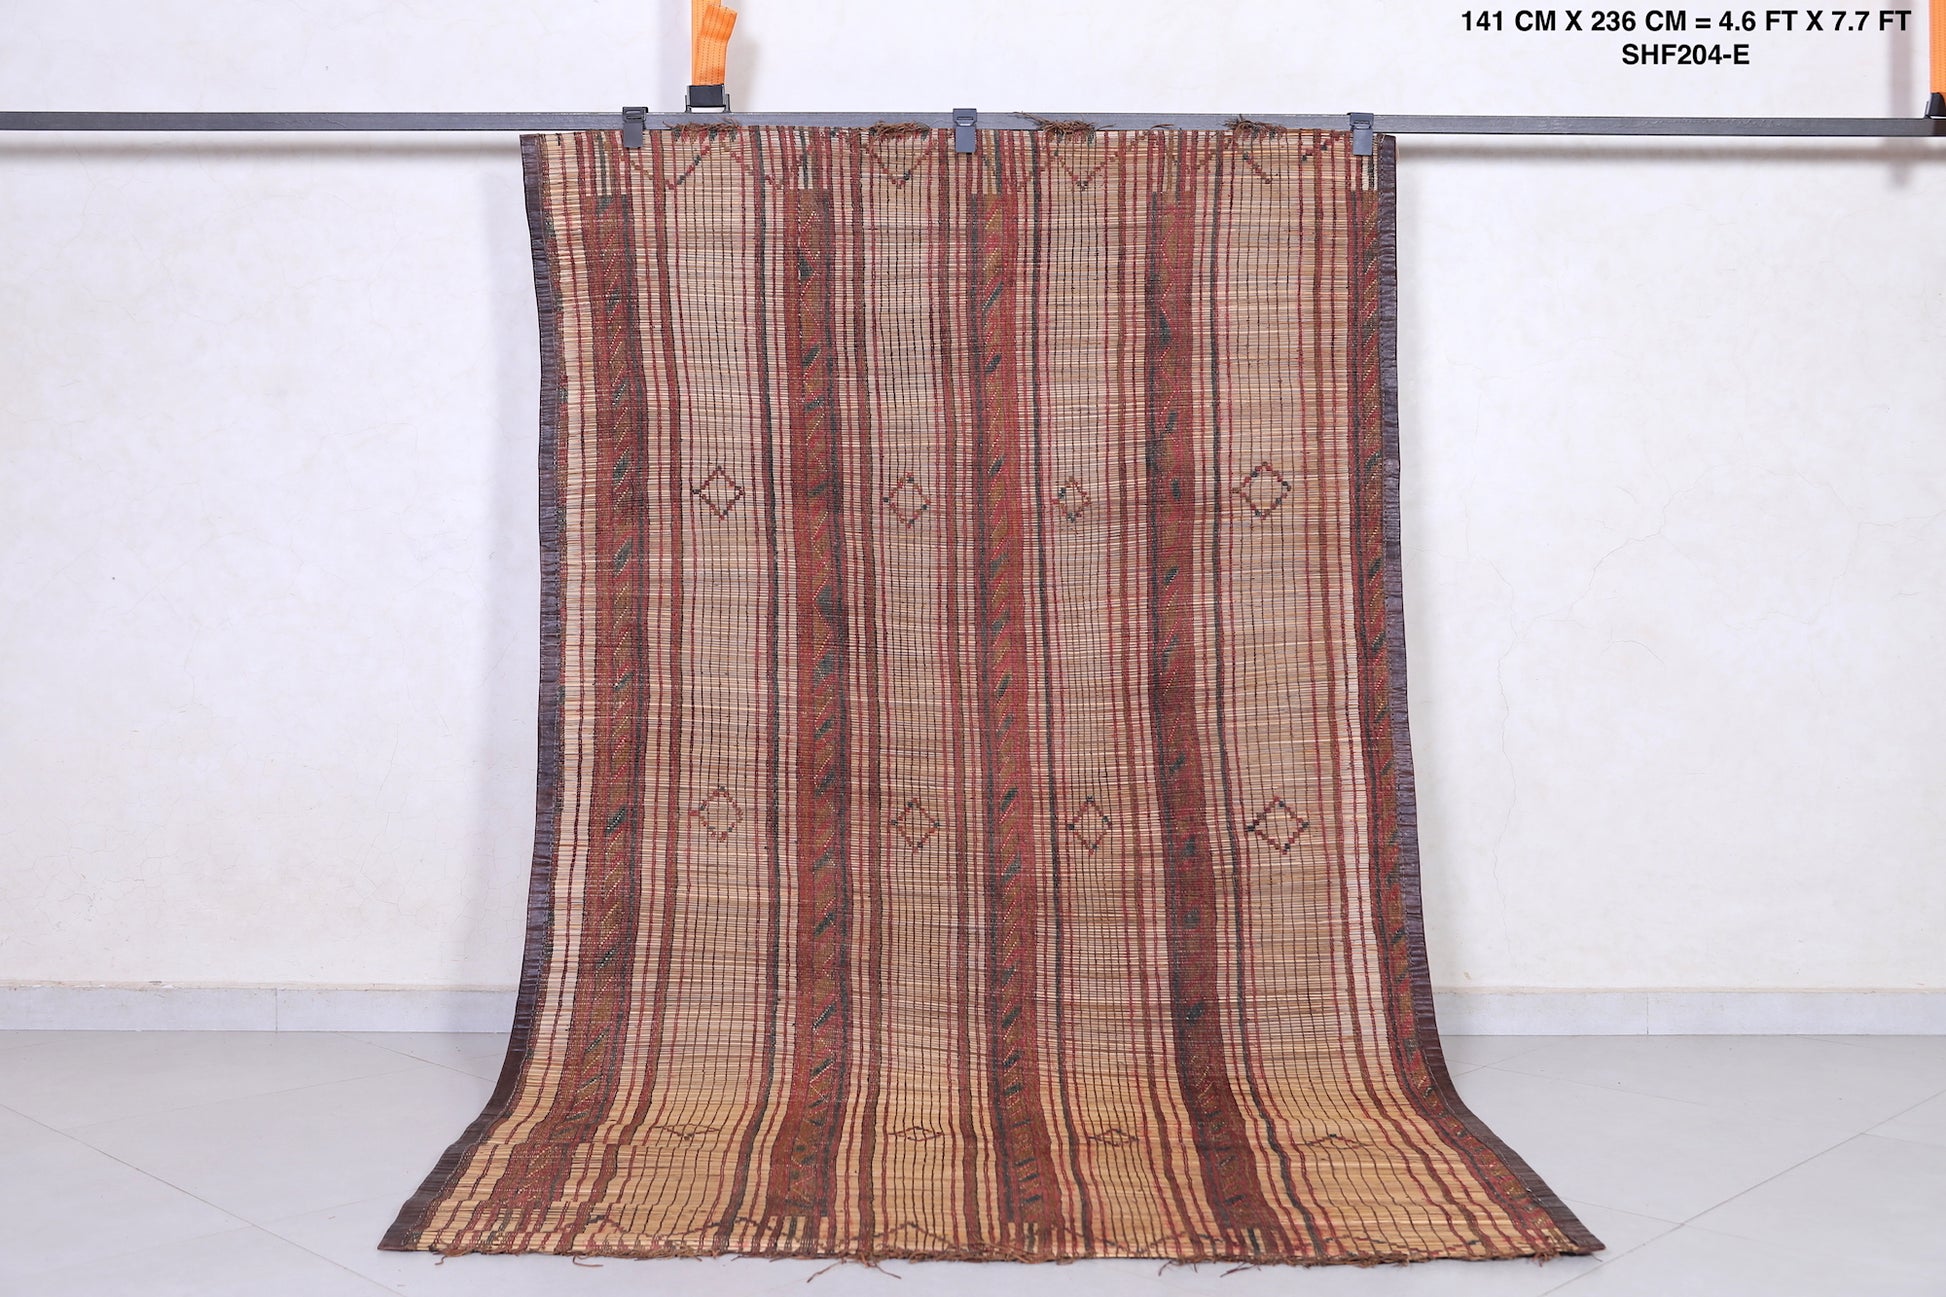 Tuareg rug 4.6 X 7.7 Feet